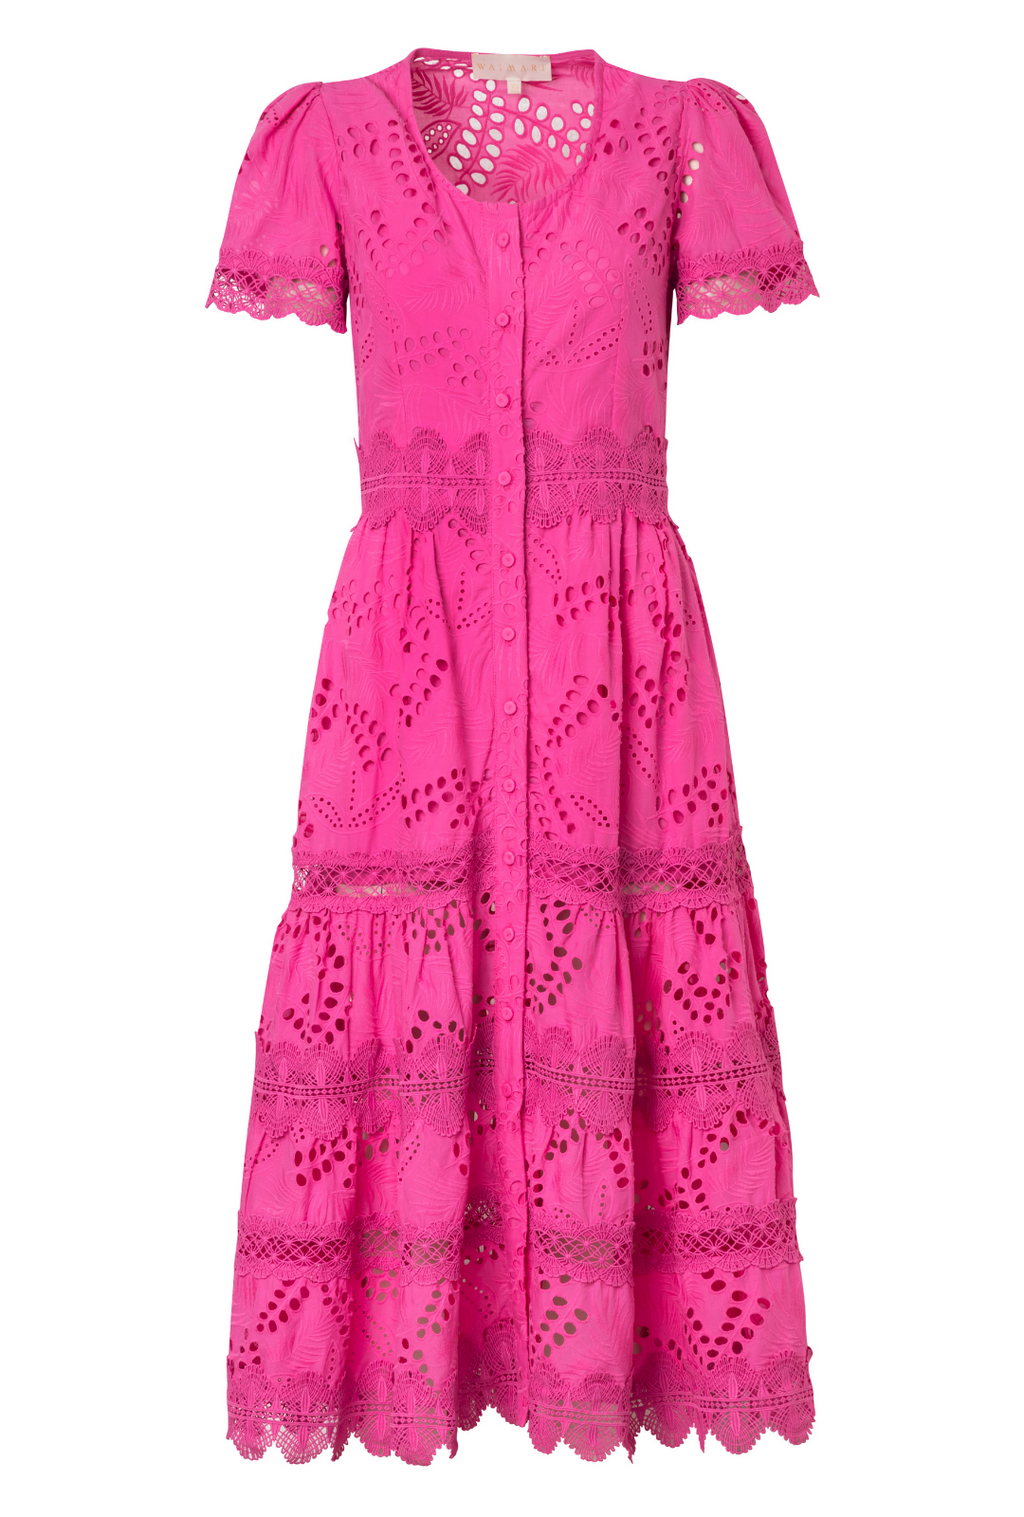 Waimari Julie Dress Fuchsia - Premium Long Dresses from Marina St Barth - Just $420! Shop now at Marina St Barth